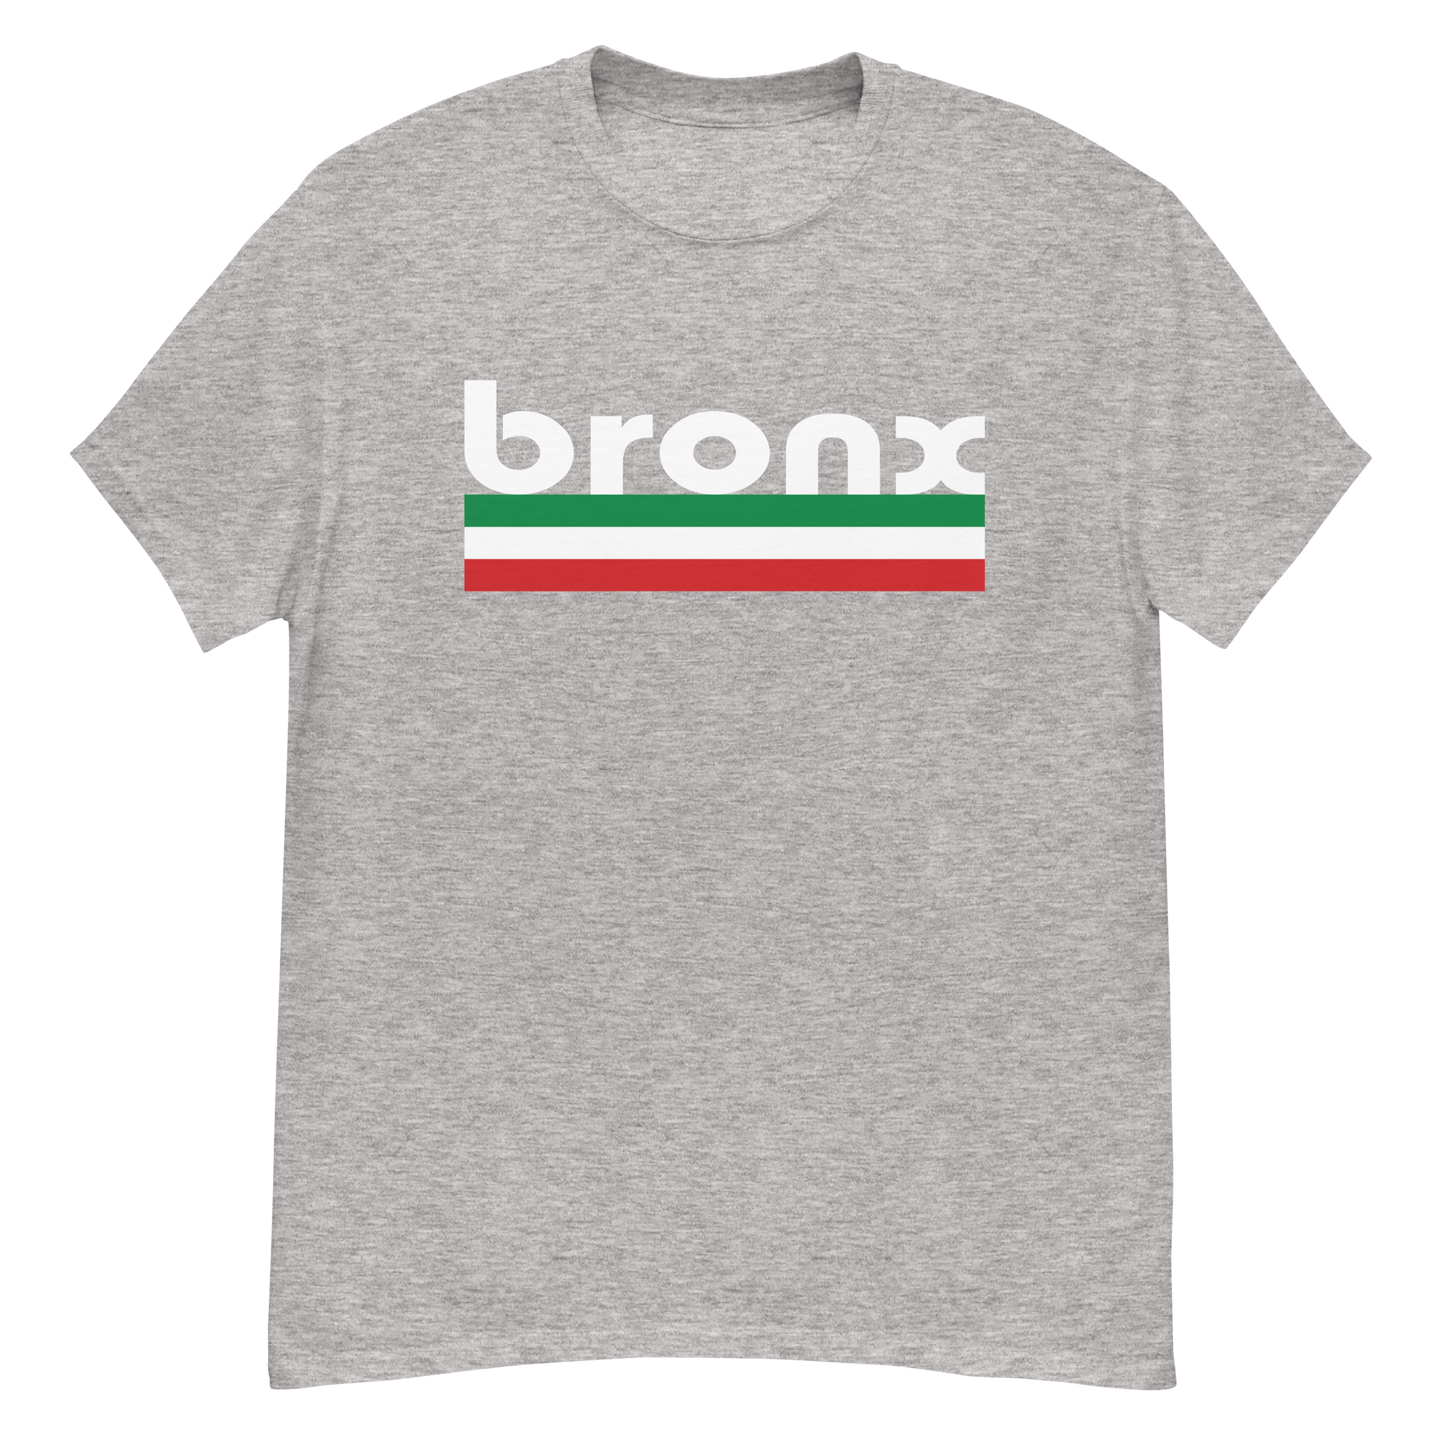 Bronx Italian Pride T-Shirt - Vintage Flag Tee for Bronx Italians